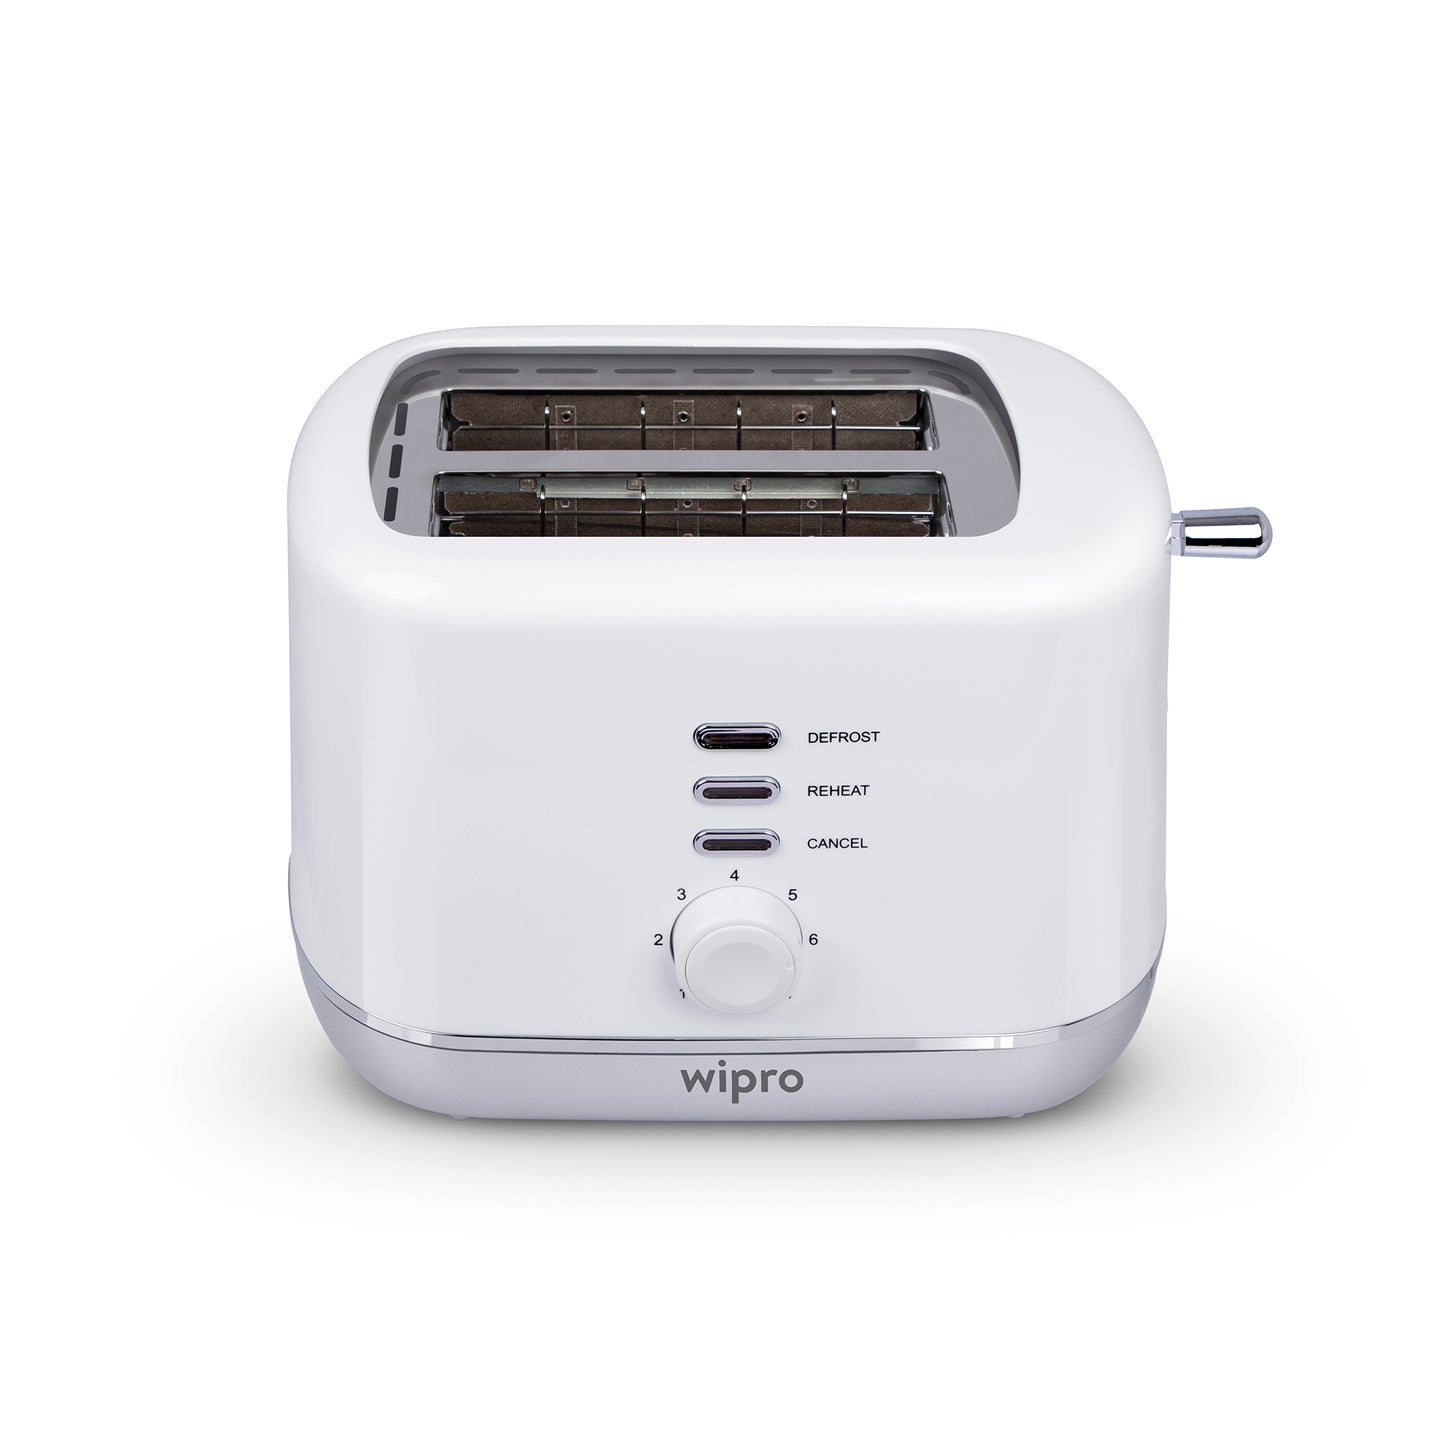 Wipro Vesta Bread Toaster 800-Watt Auto Pop-up